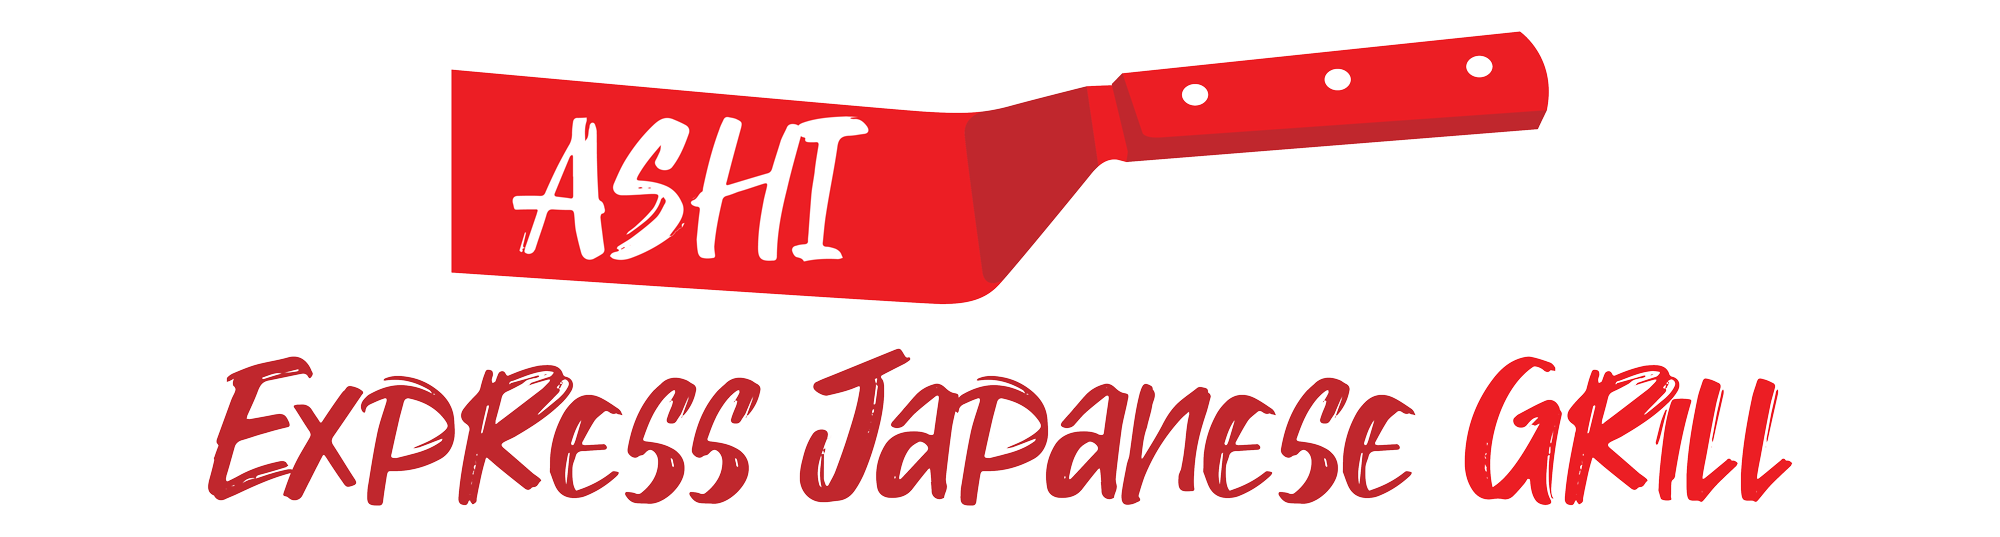 Ashi Express Japanese Grill logo top - Homepage